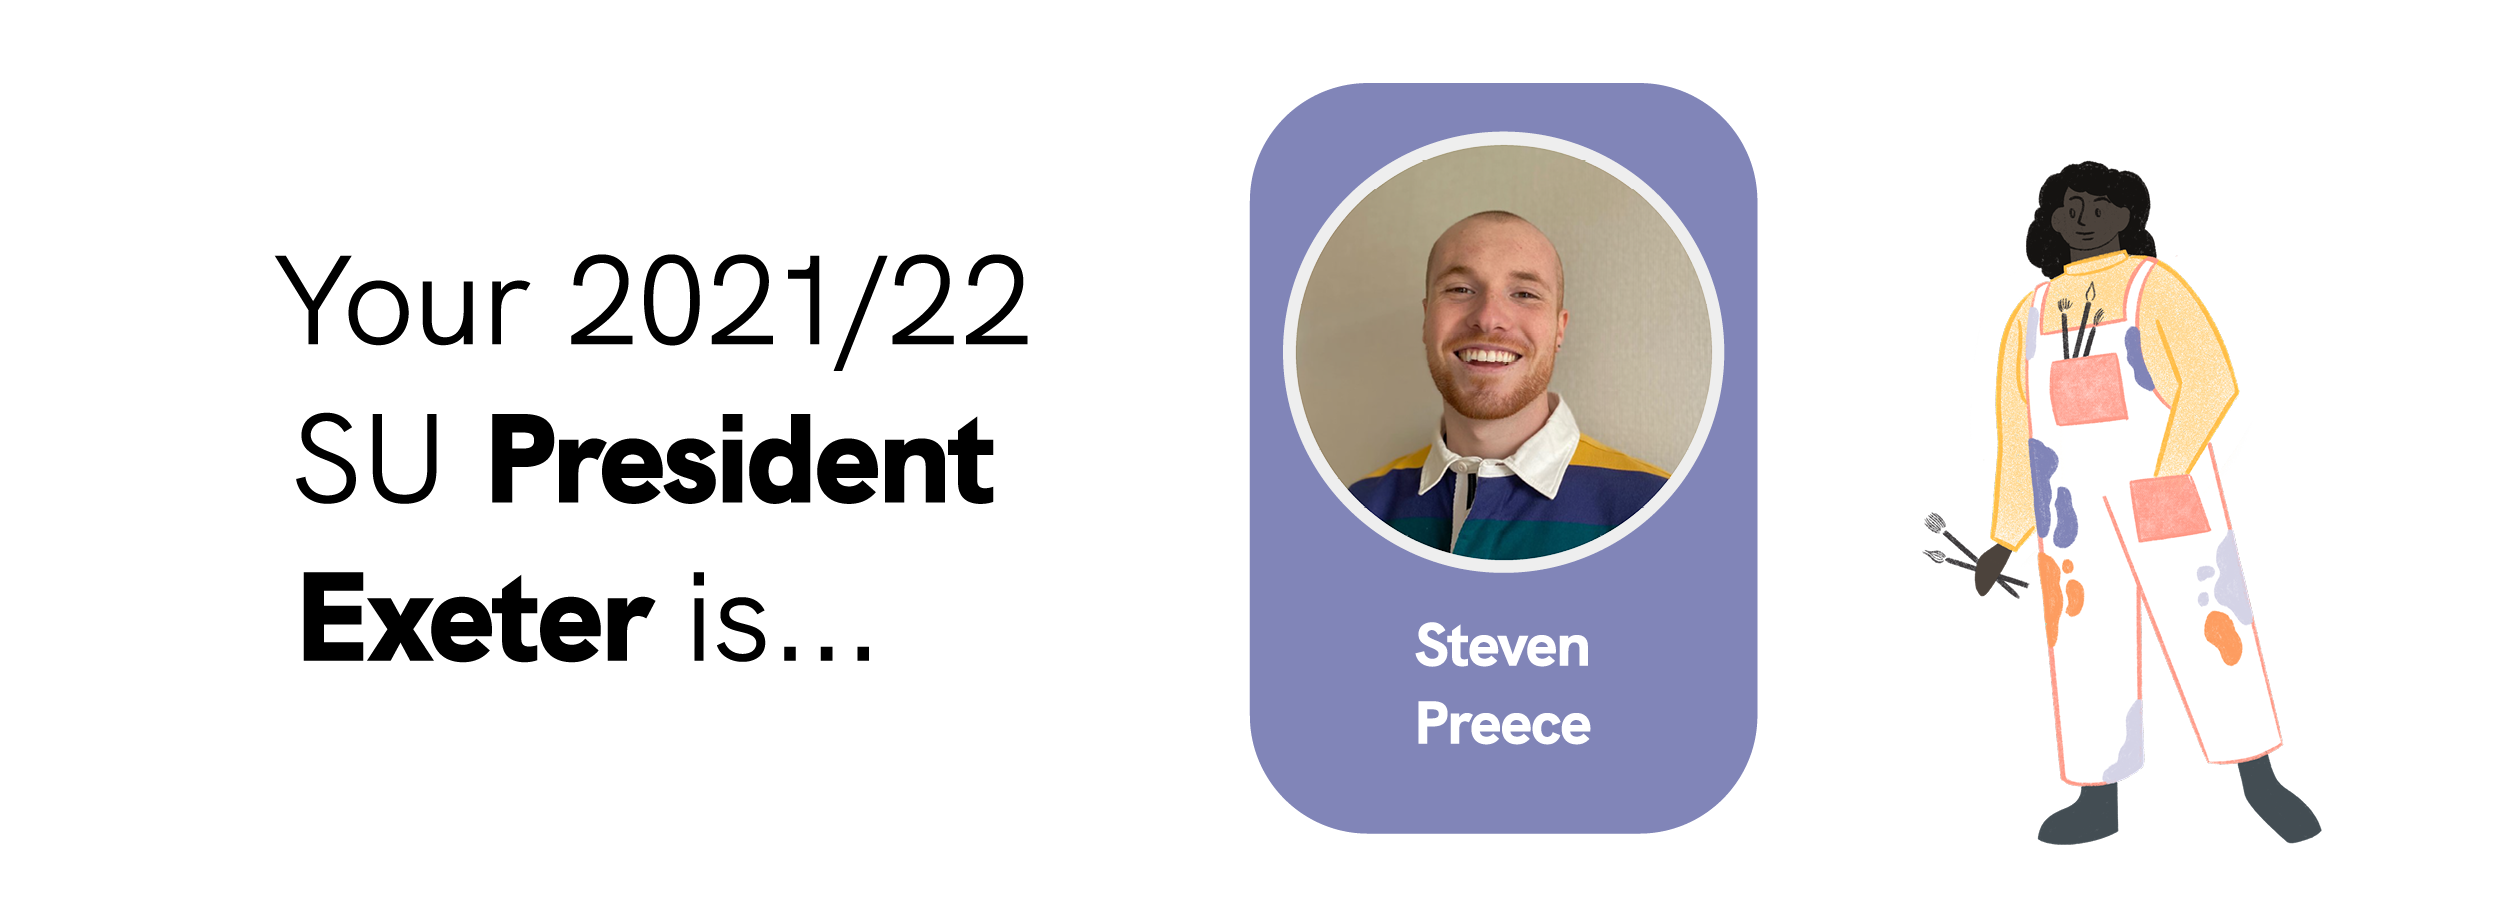 Your 2021/22 SU President Exeter is... Steven Preece!